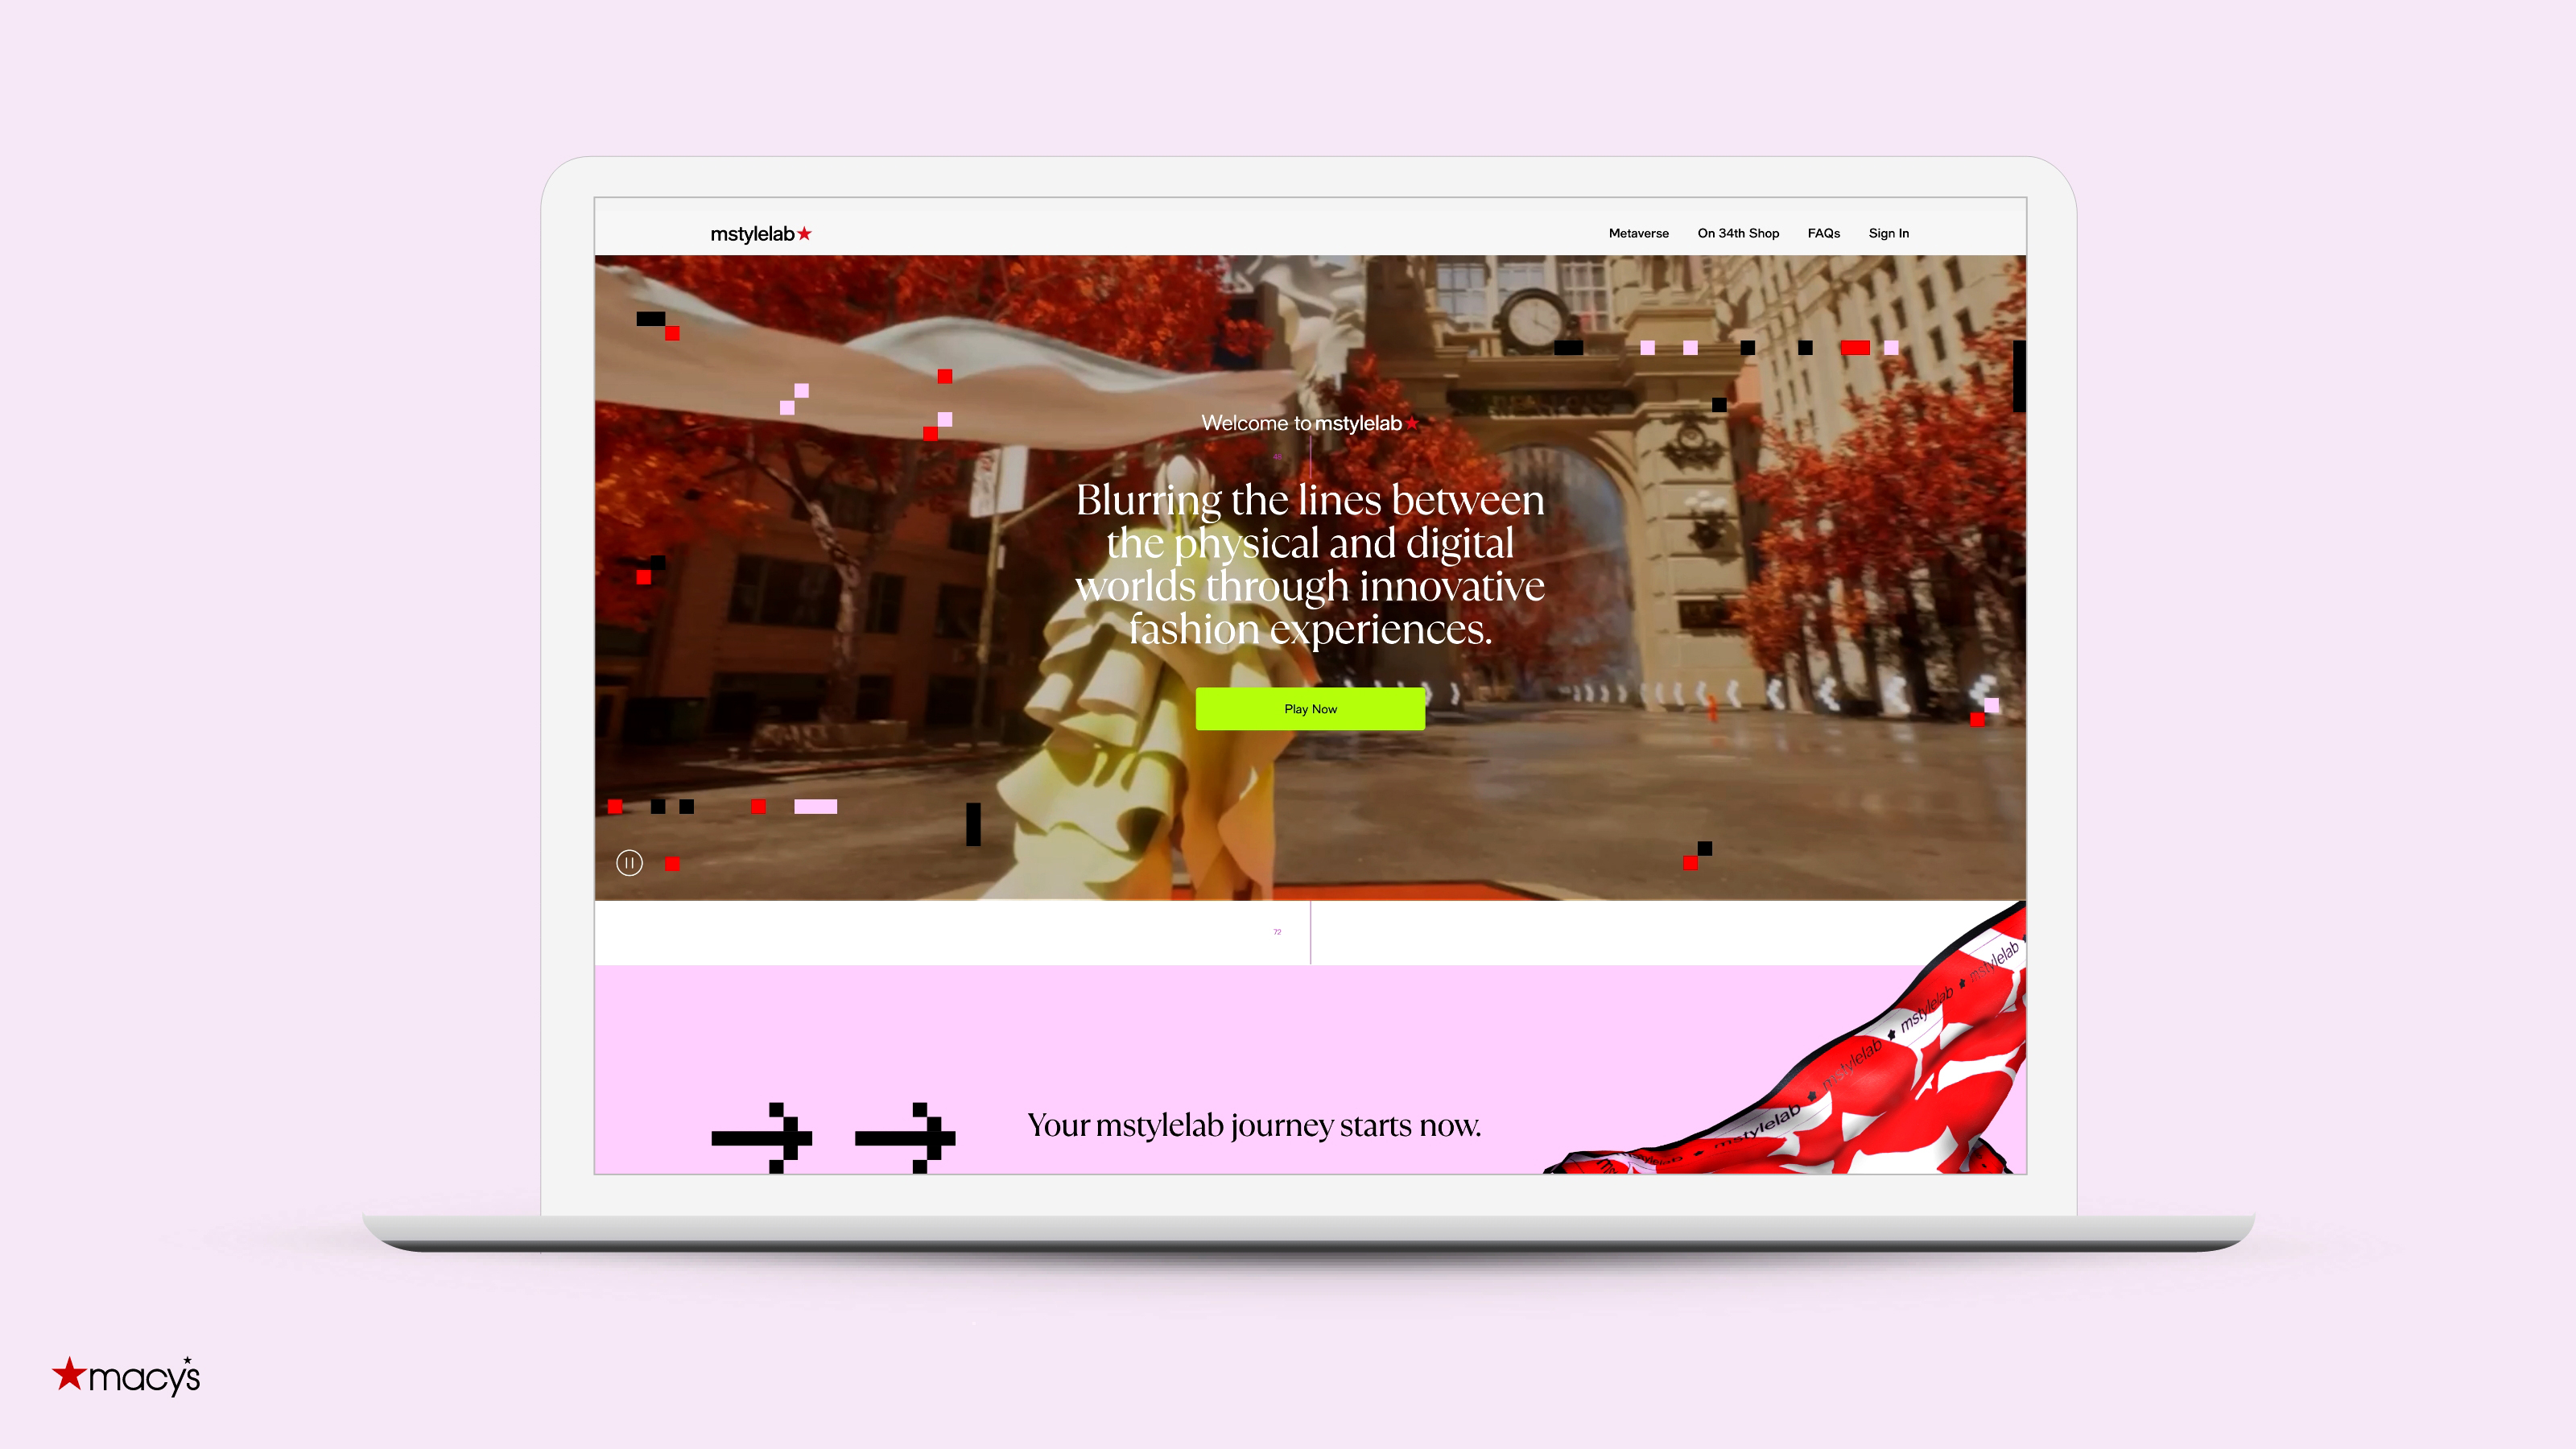 Macy's Launches New Digital Fashion Platform – mstylelab